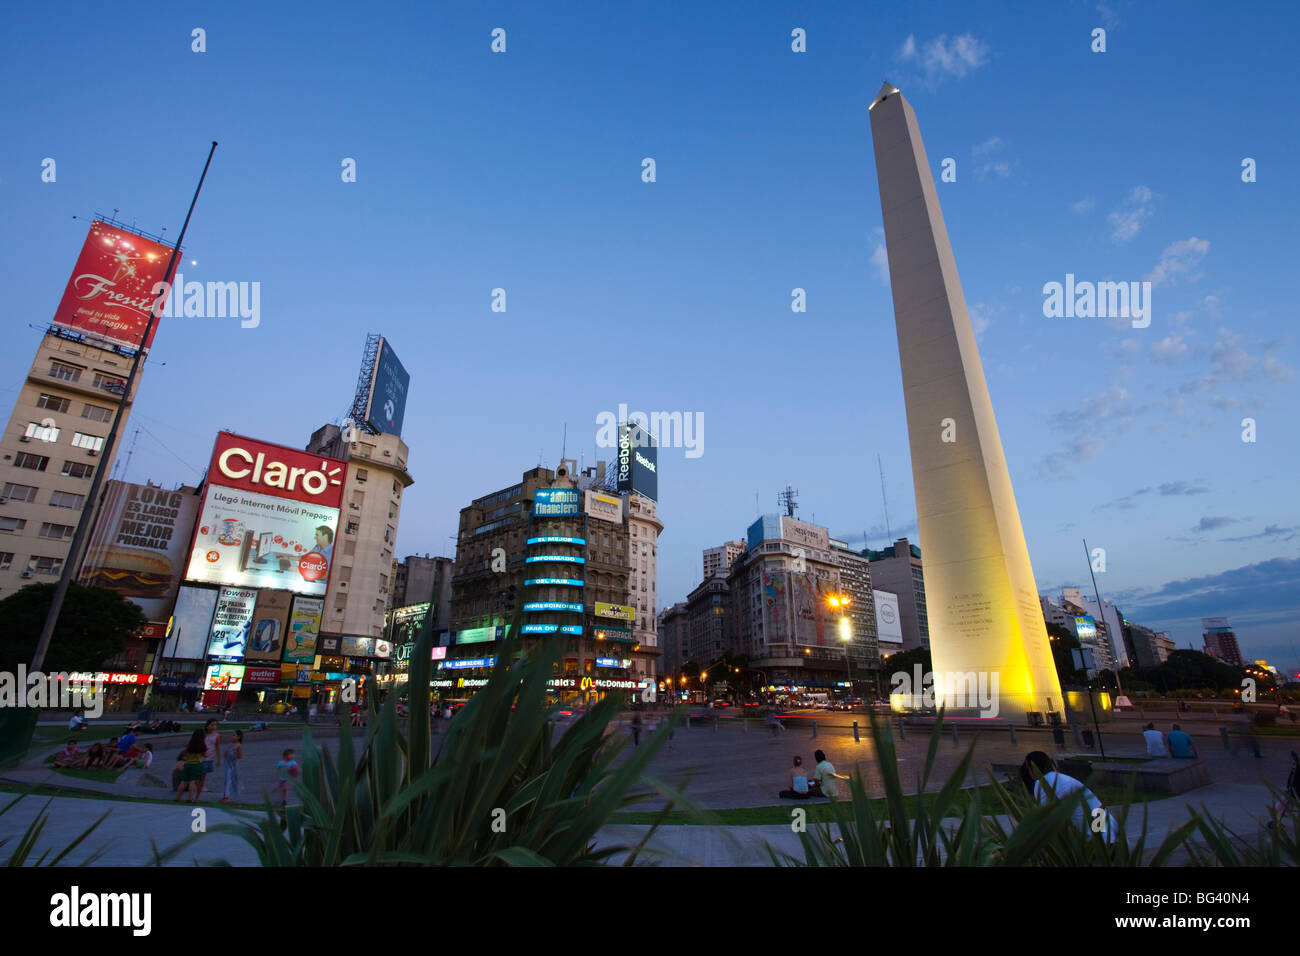 Argentina, Buenos Aires, El Obelisko, symbol of Argentina, Avenida 9 de Julio, Plaza de la Republica Stock Photo